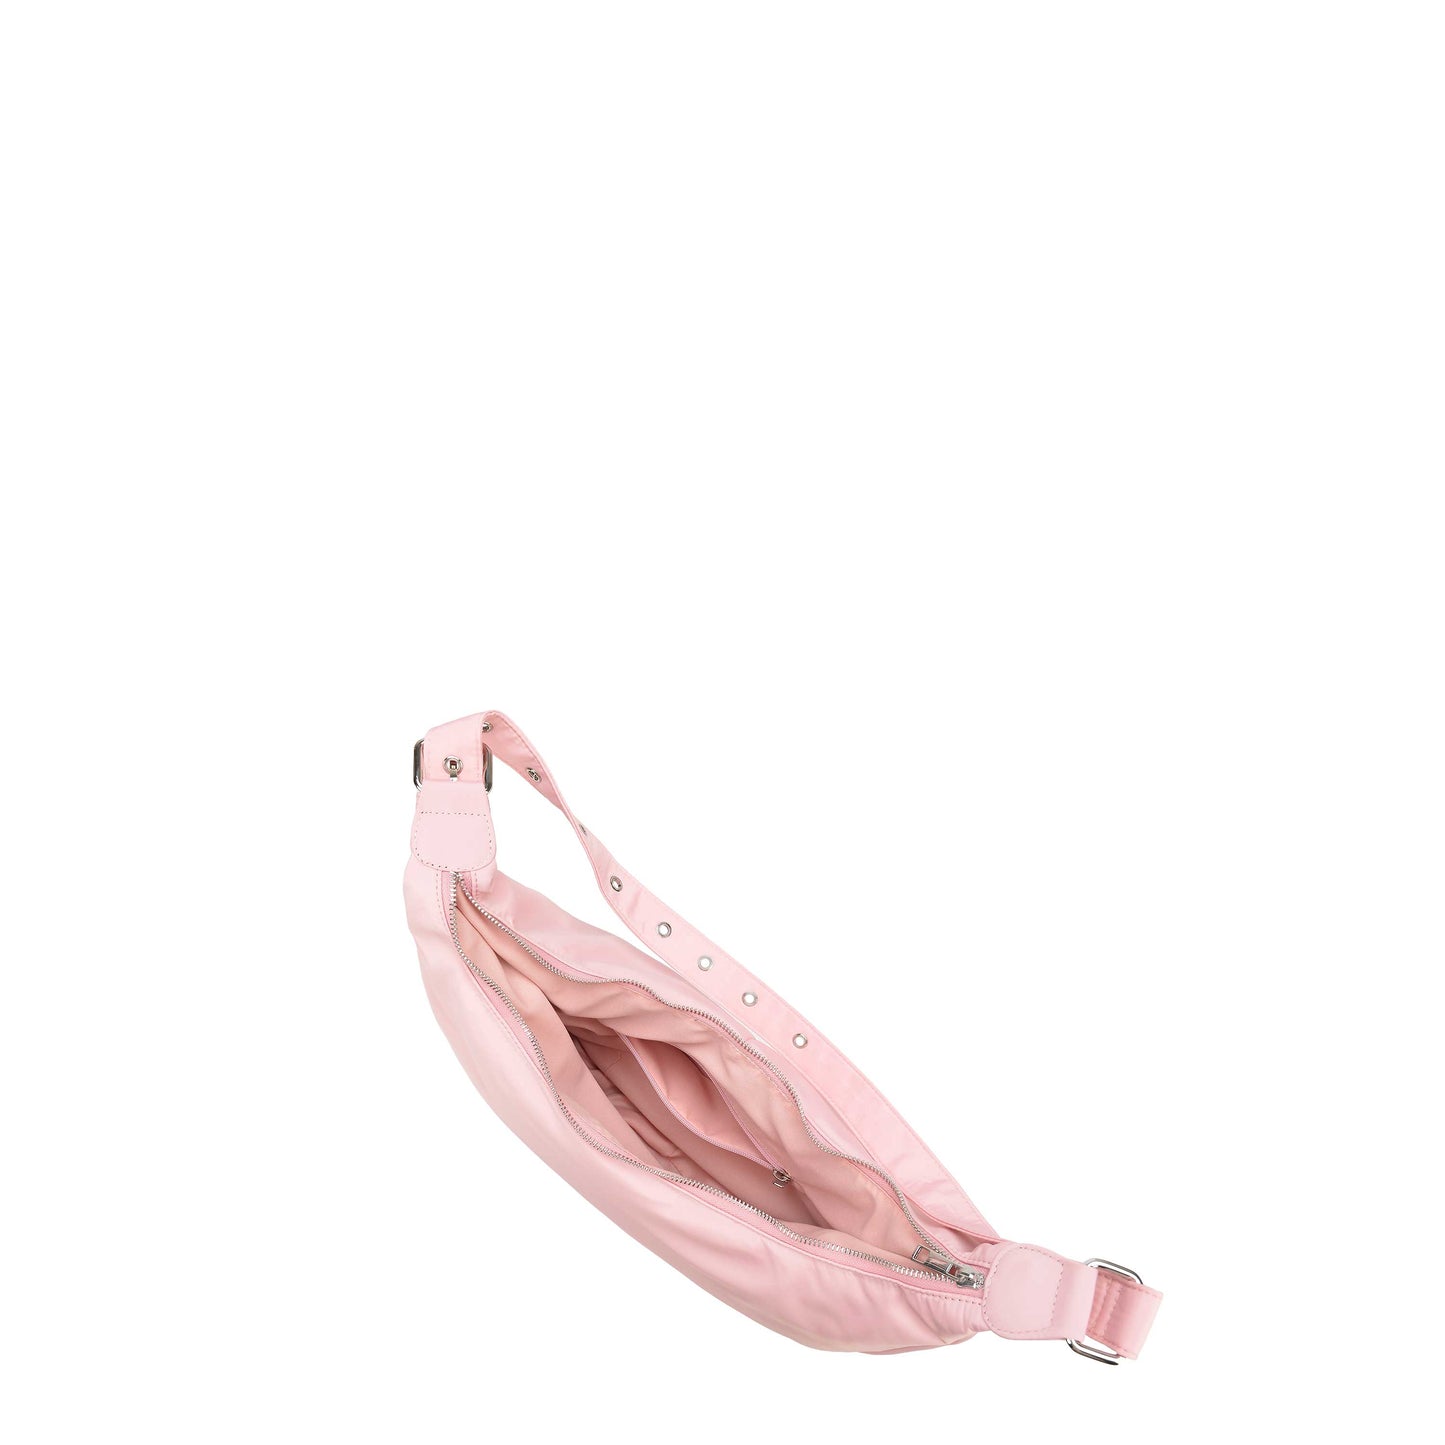 Núnoo Stella Recycled Nylon Light Pink Shoulder bags Light pink